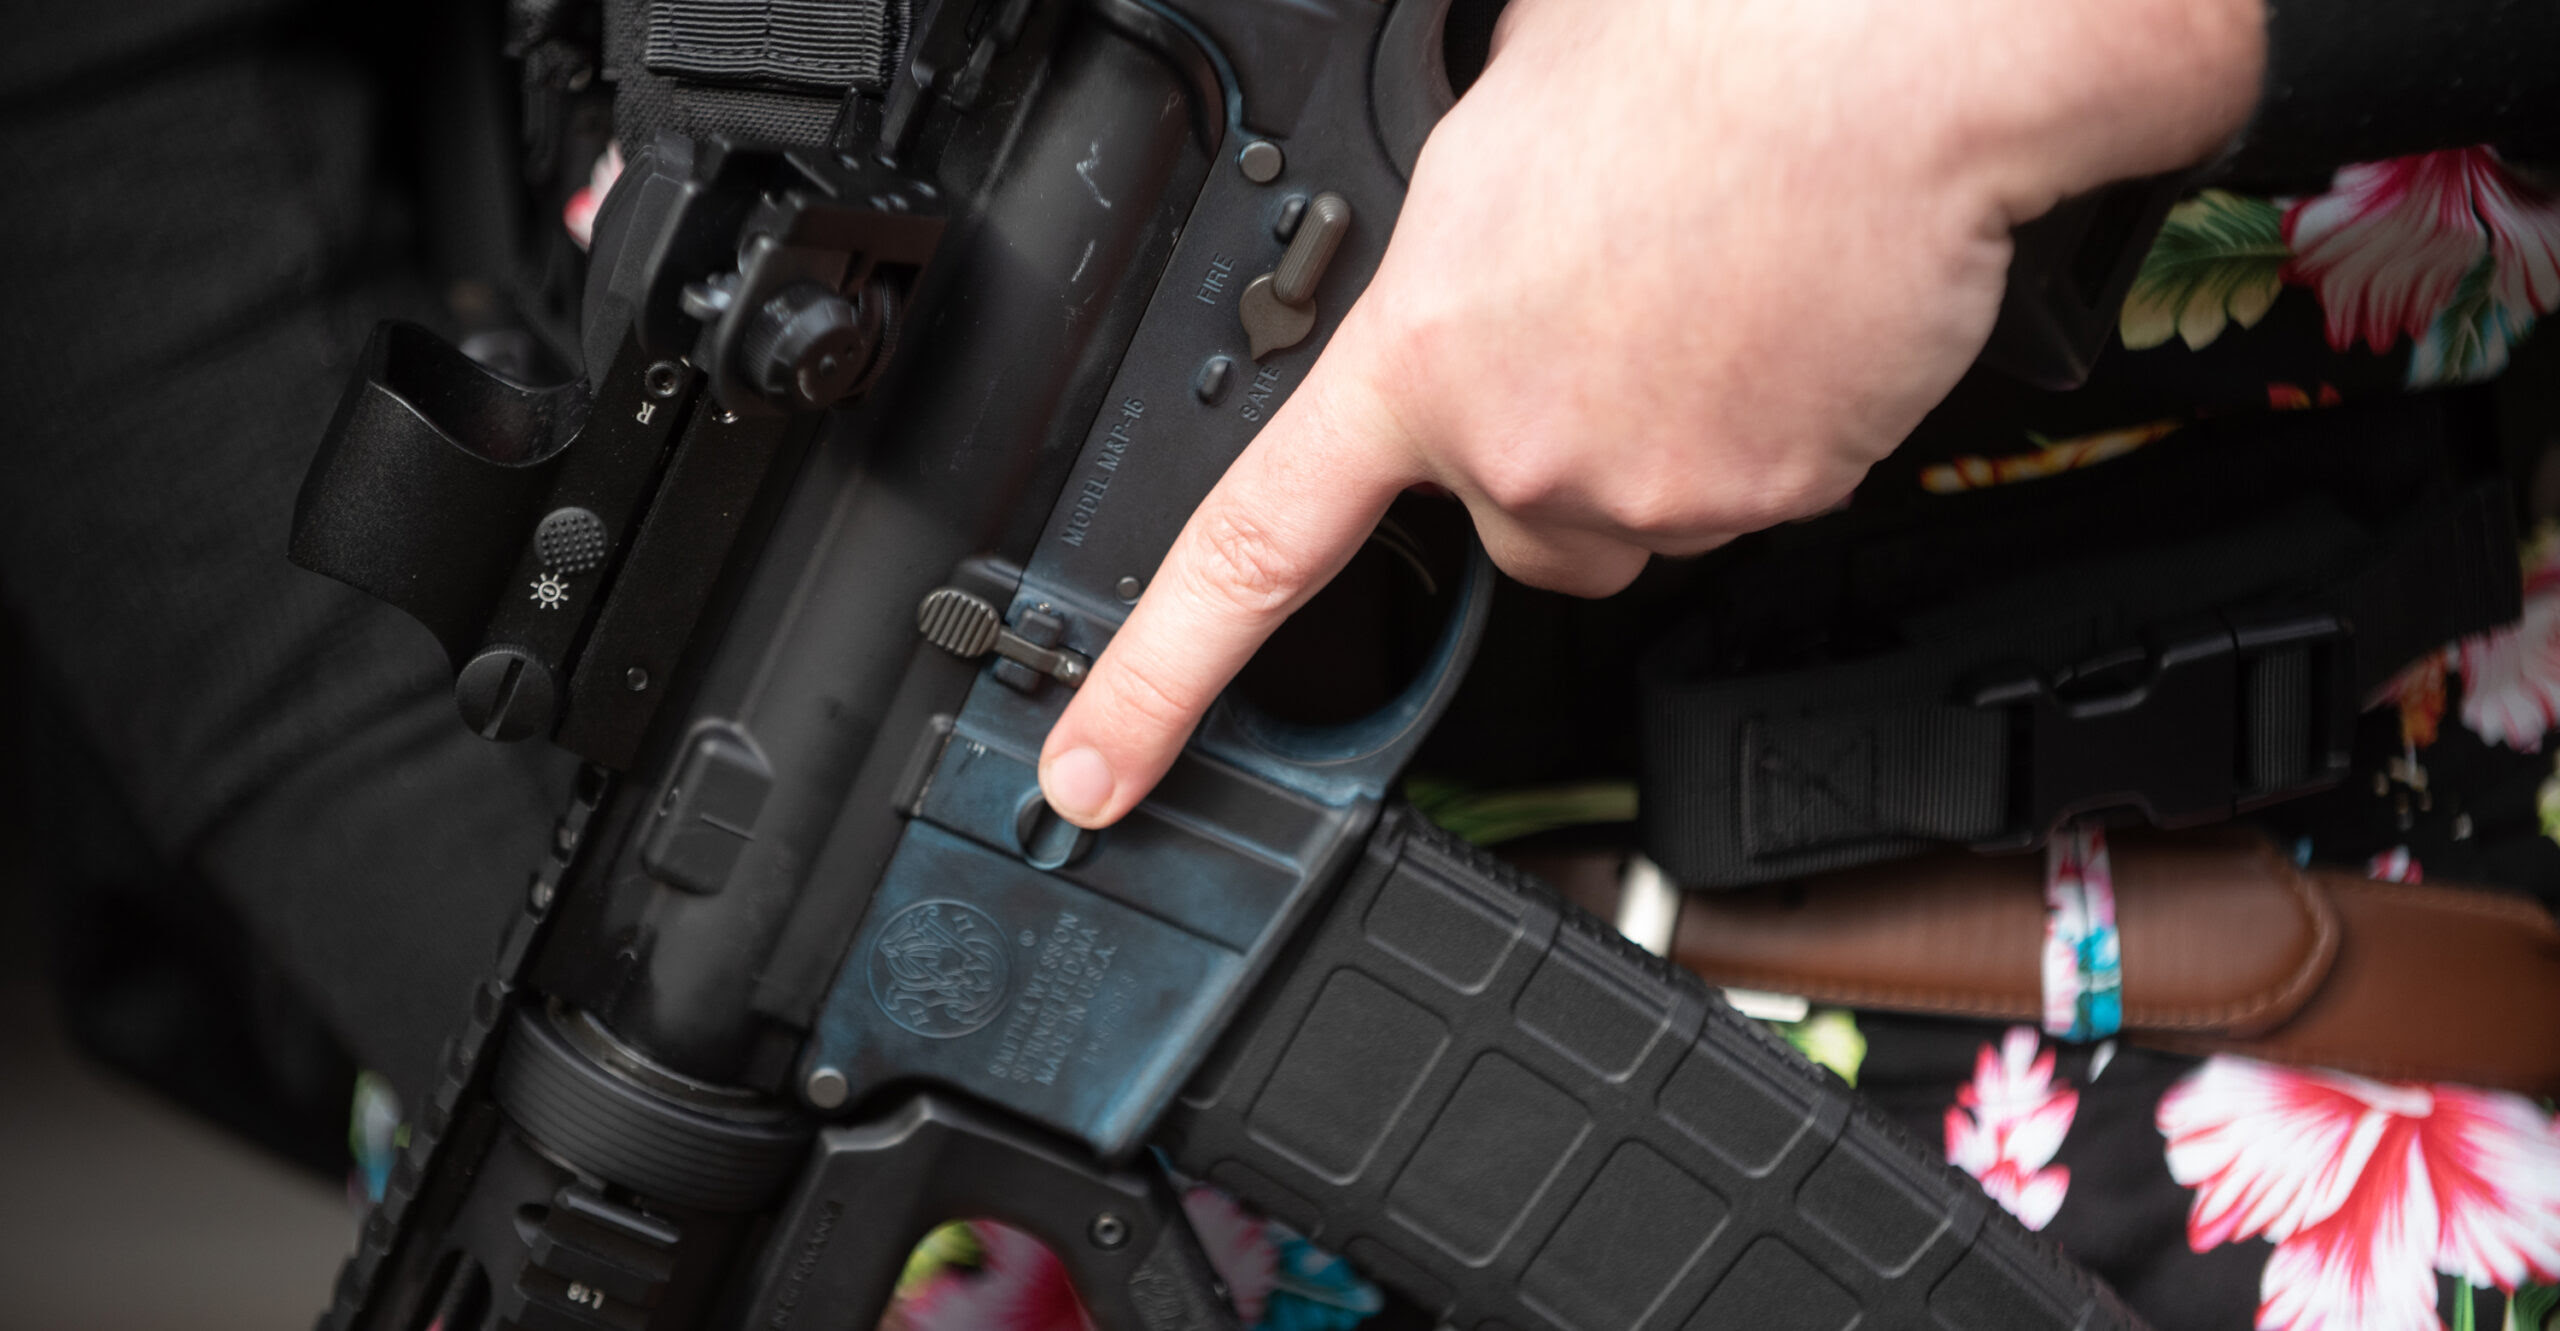 Why Biden’s Gun Control Agenda Wouldn’t Make America Safer